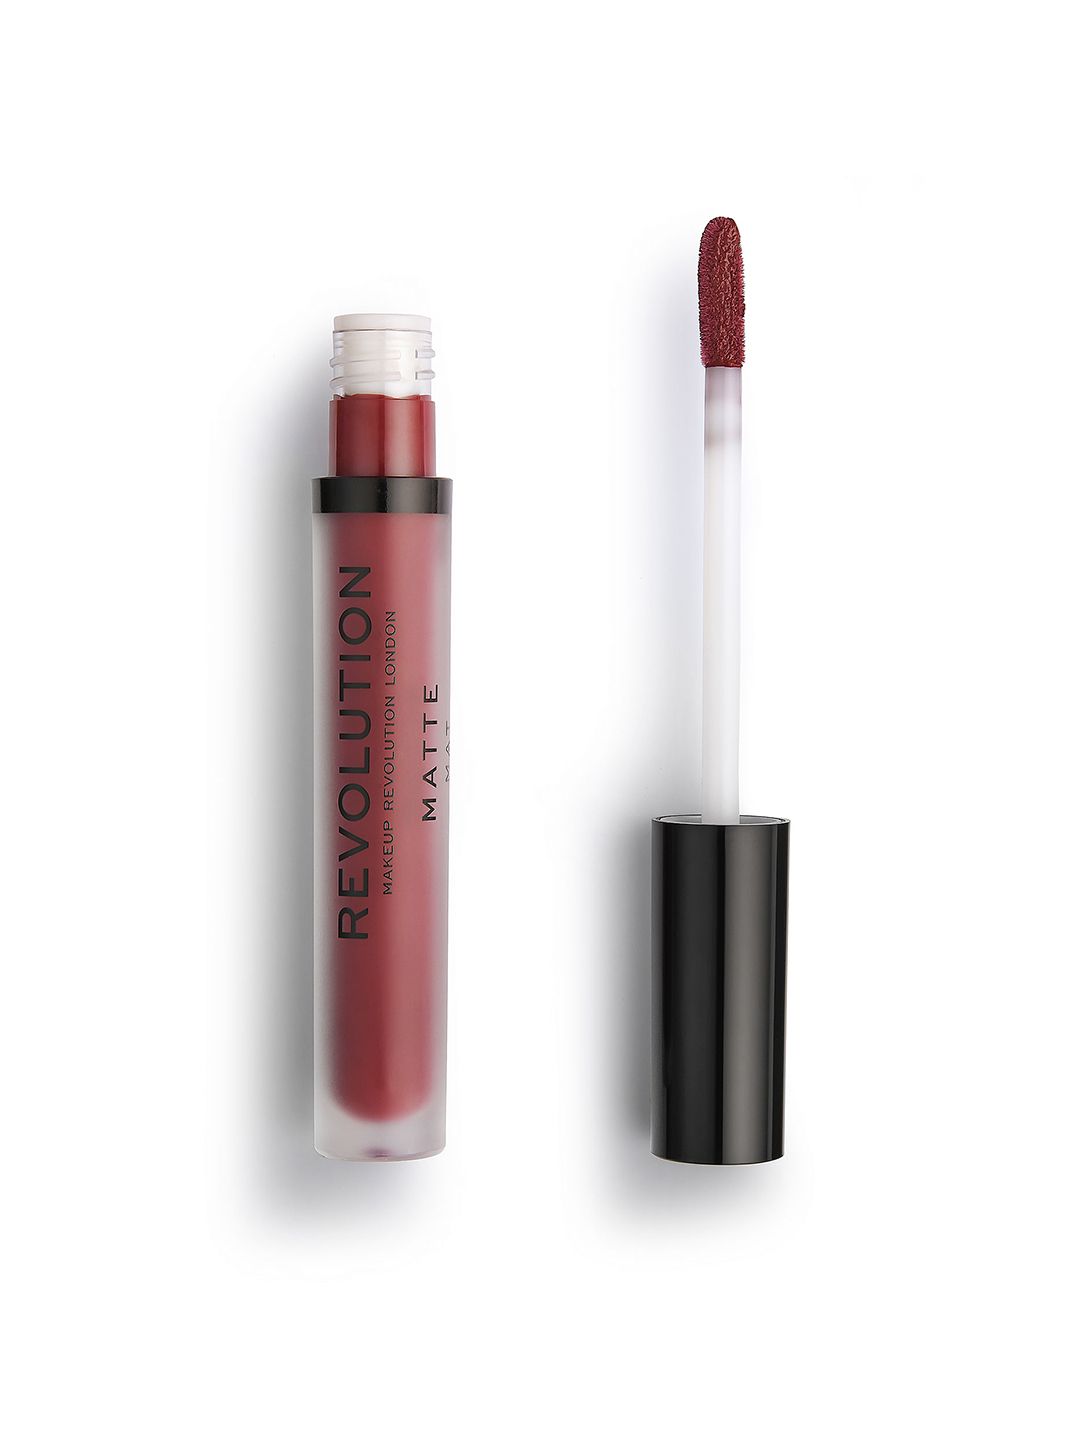 Makeup Revolution London Matte Lipstick - Vampire 147 3 ml Price in India